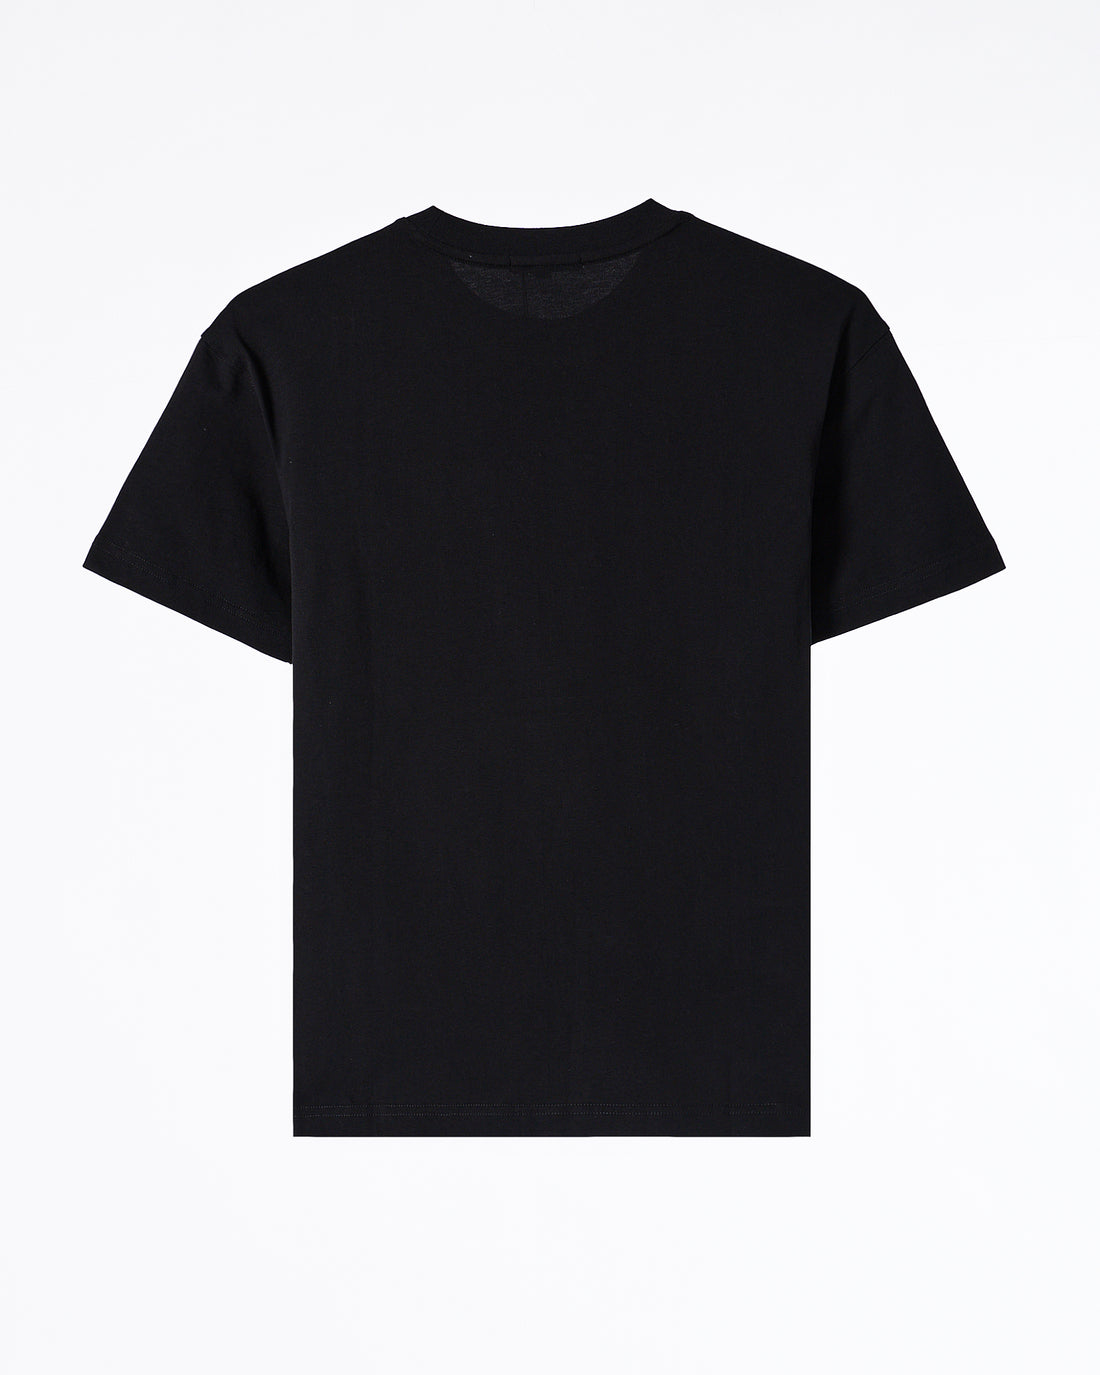 VS 라인스톤 프린트 남성 티셔츠 54.90